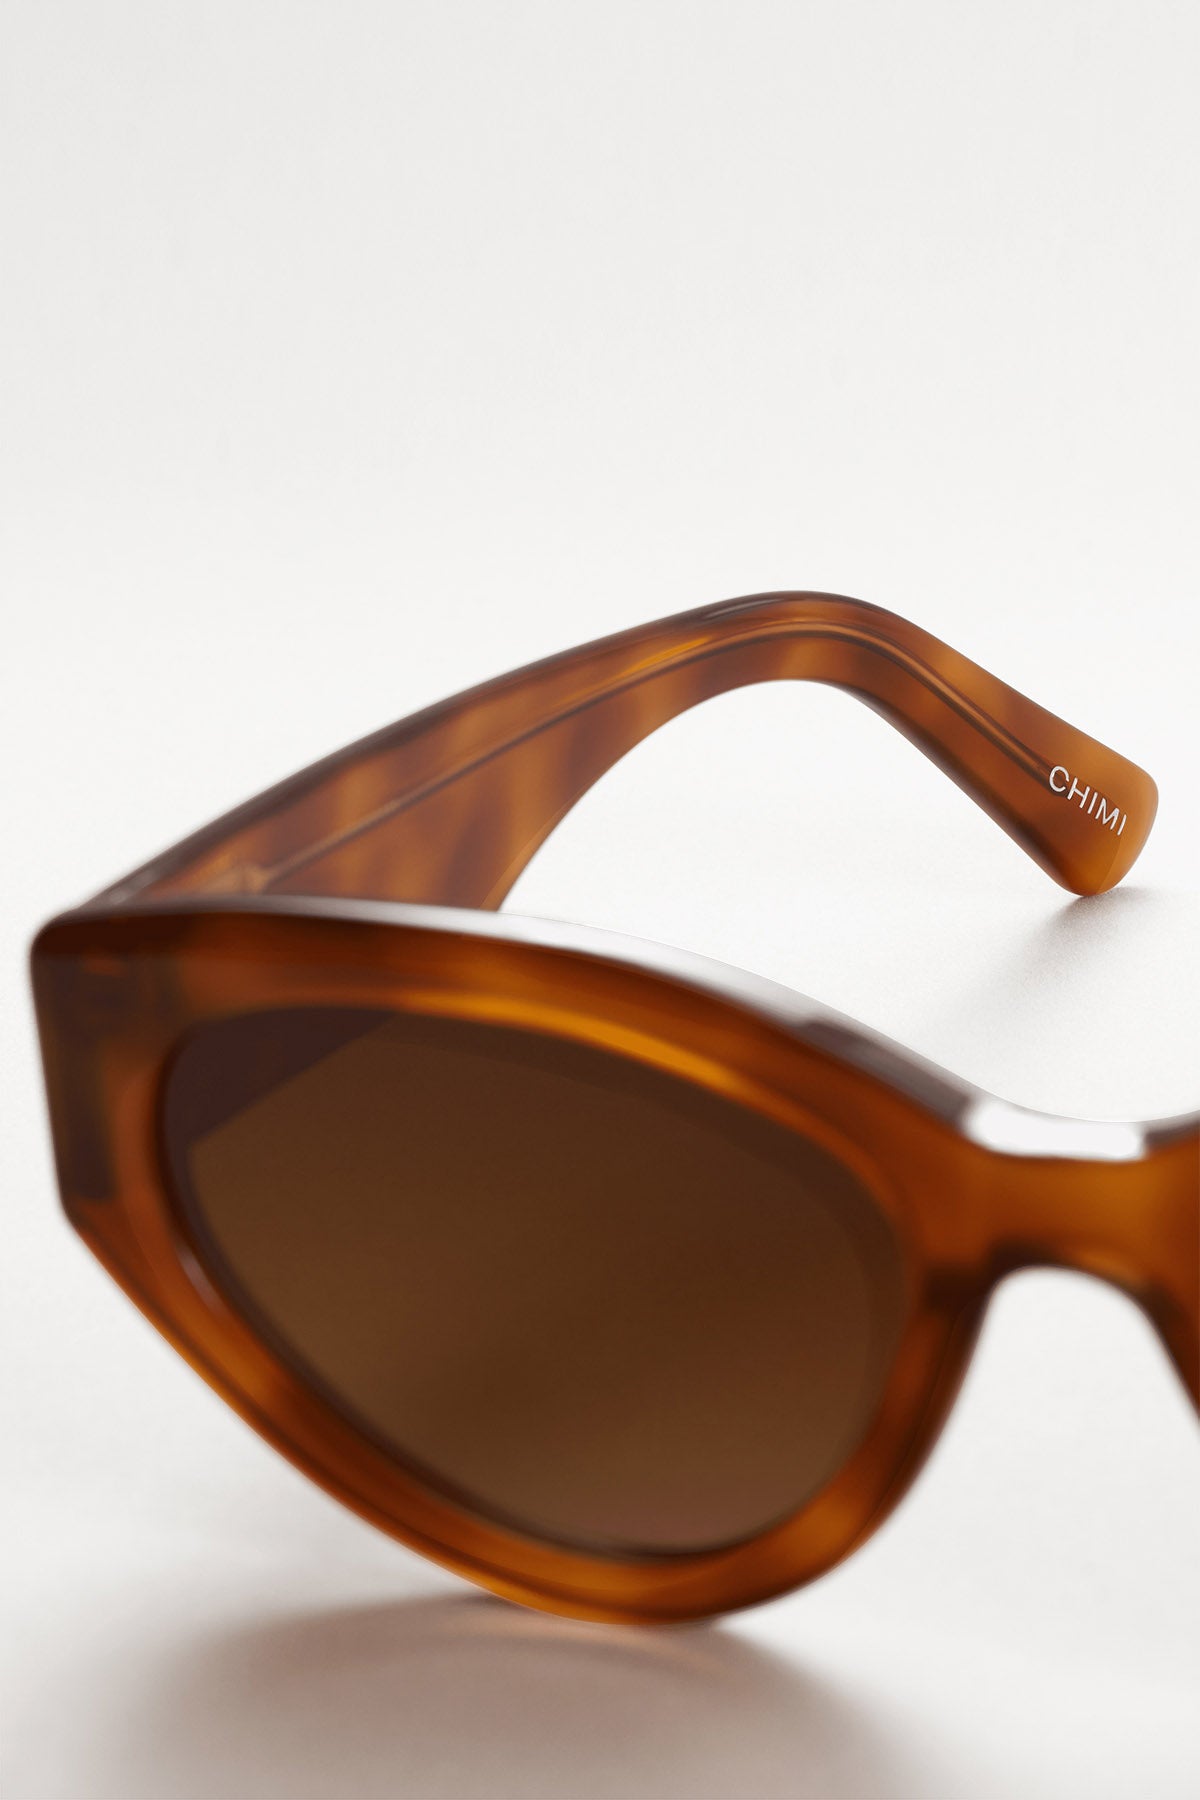 Chimi 06 Sunglasses Detail-22133021671617